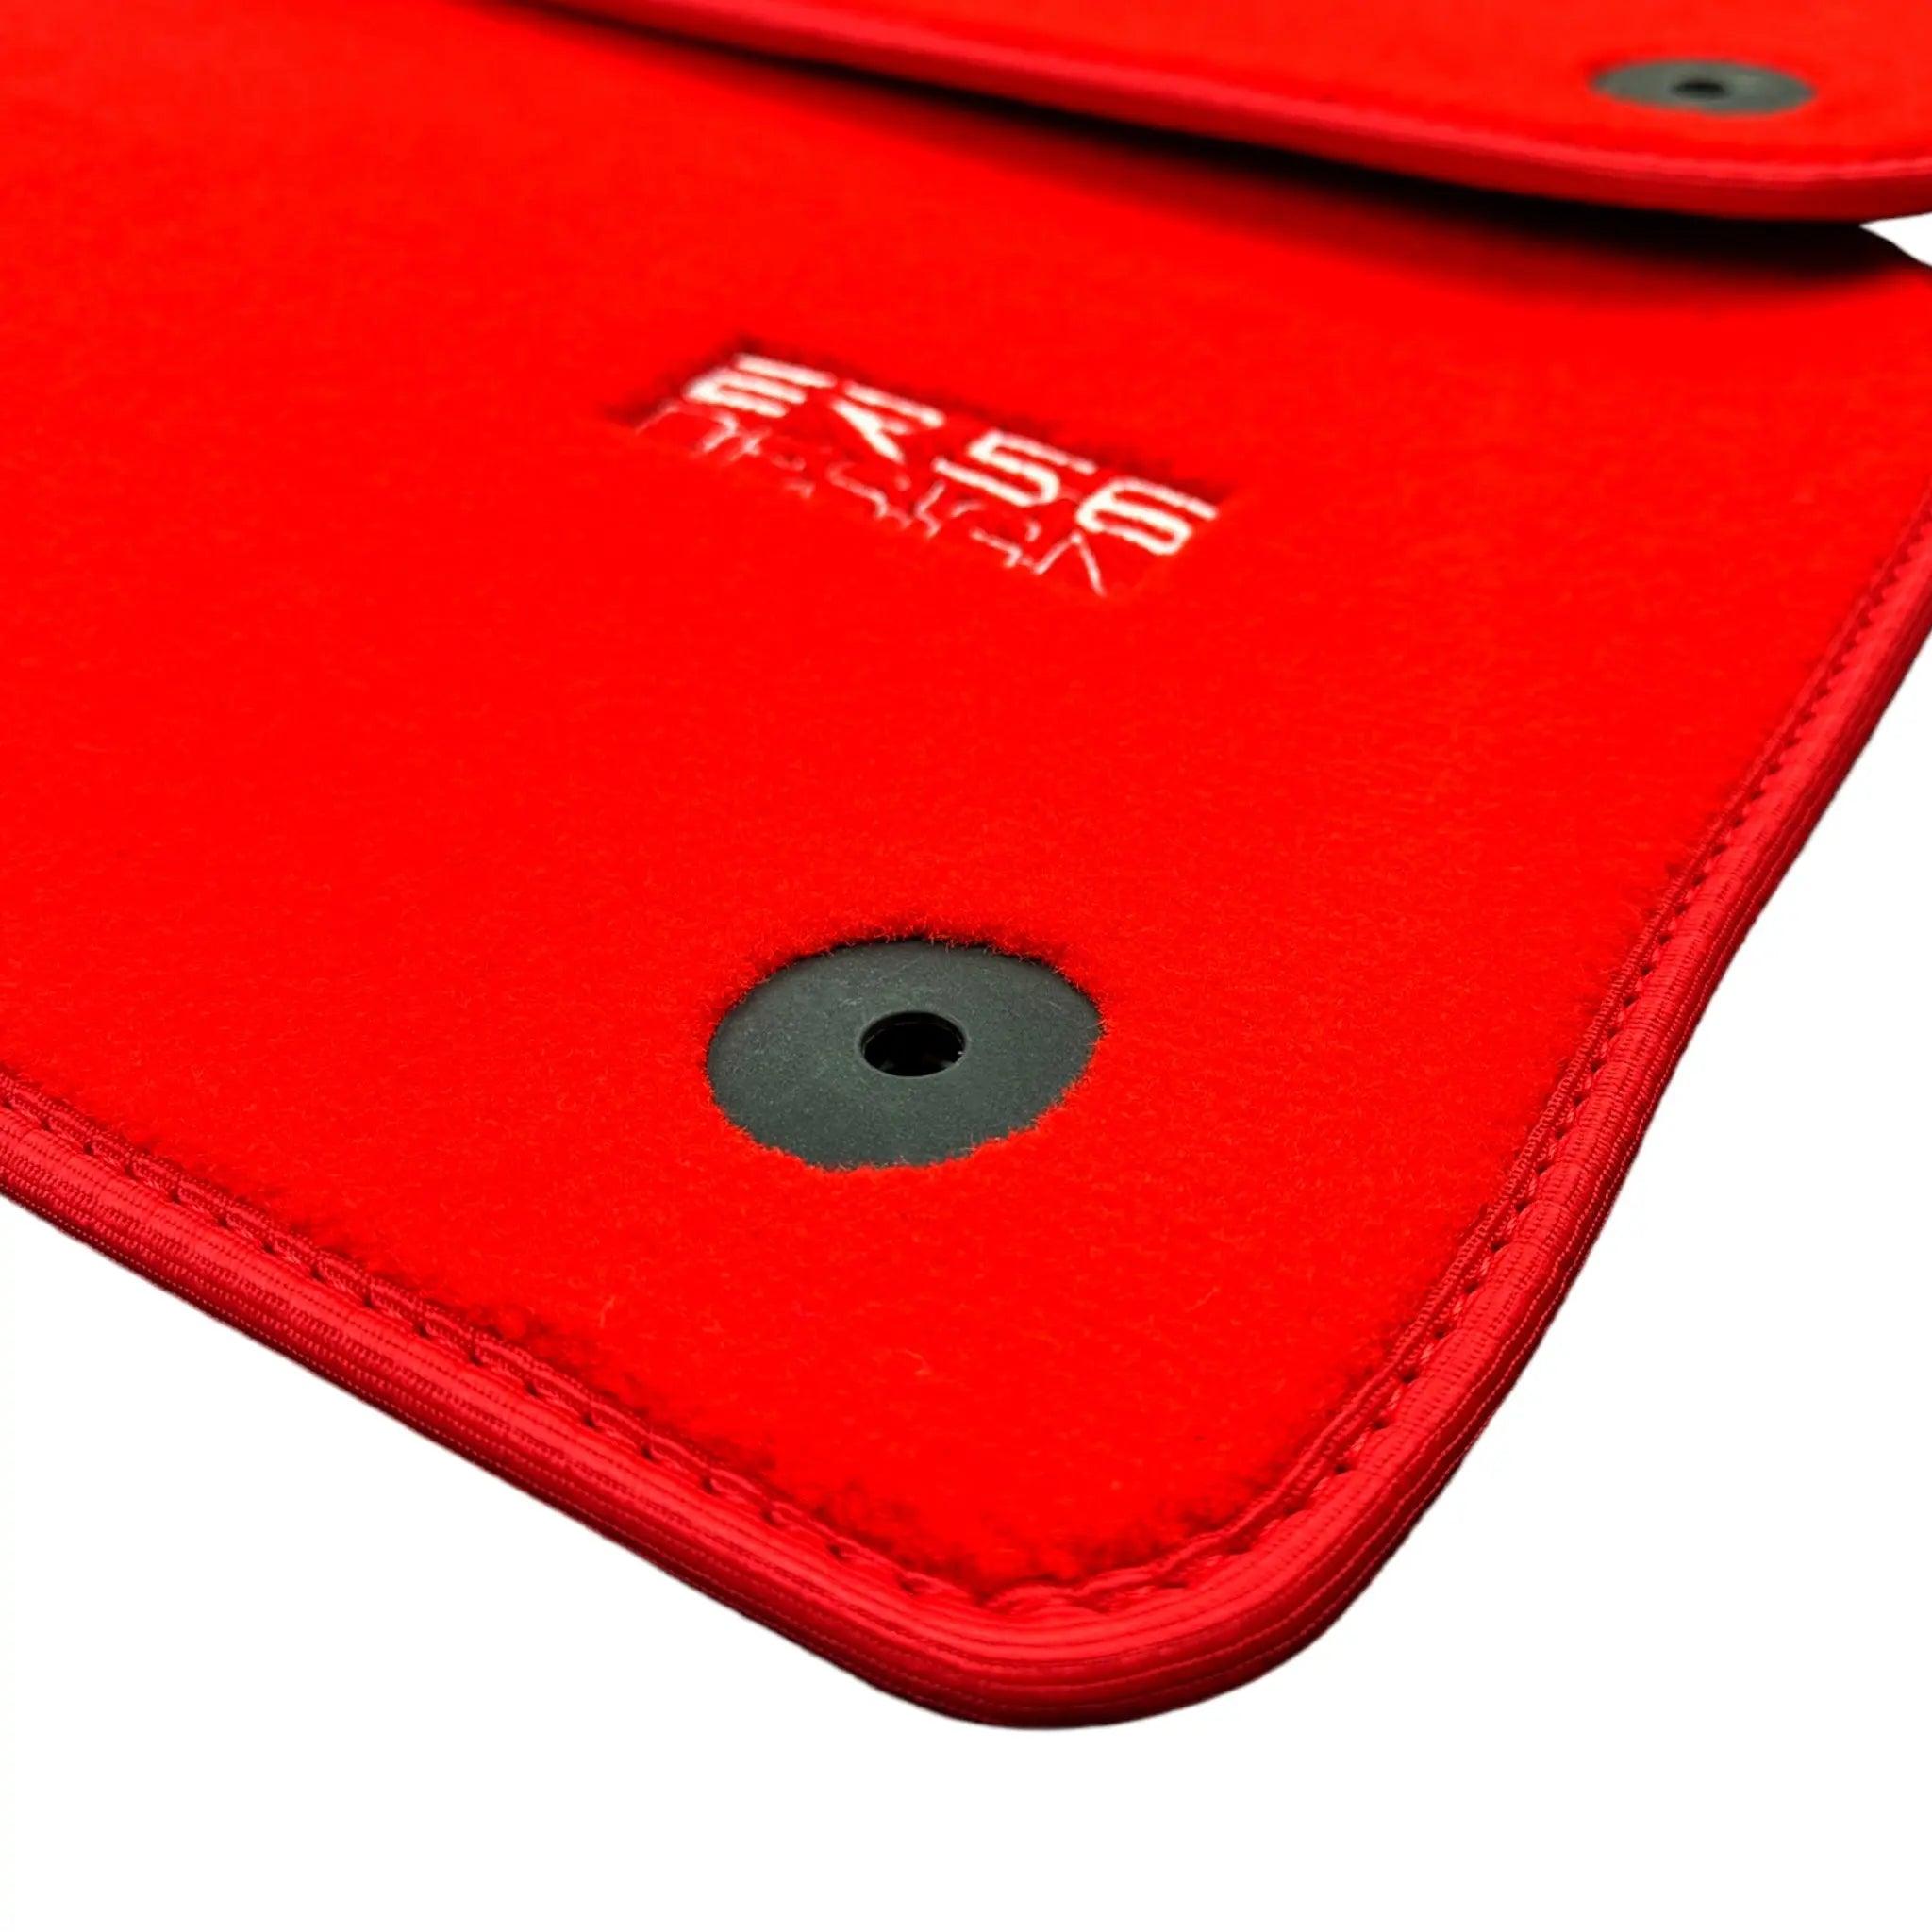 Red Floor Mats for Audi A5 - F57 Convertible (2017-2020) | ER56 Design